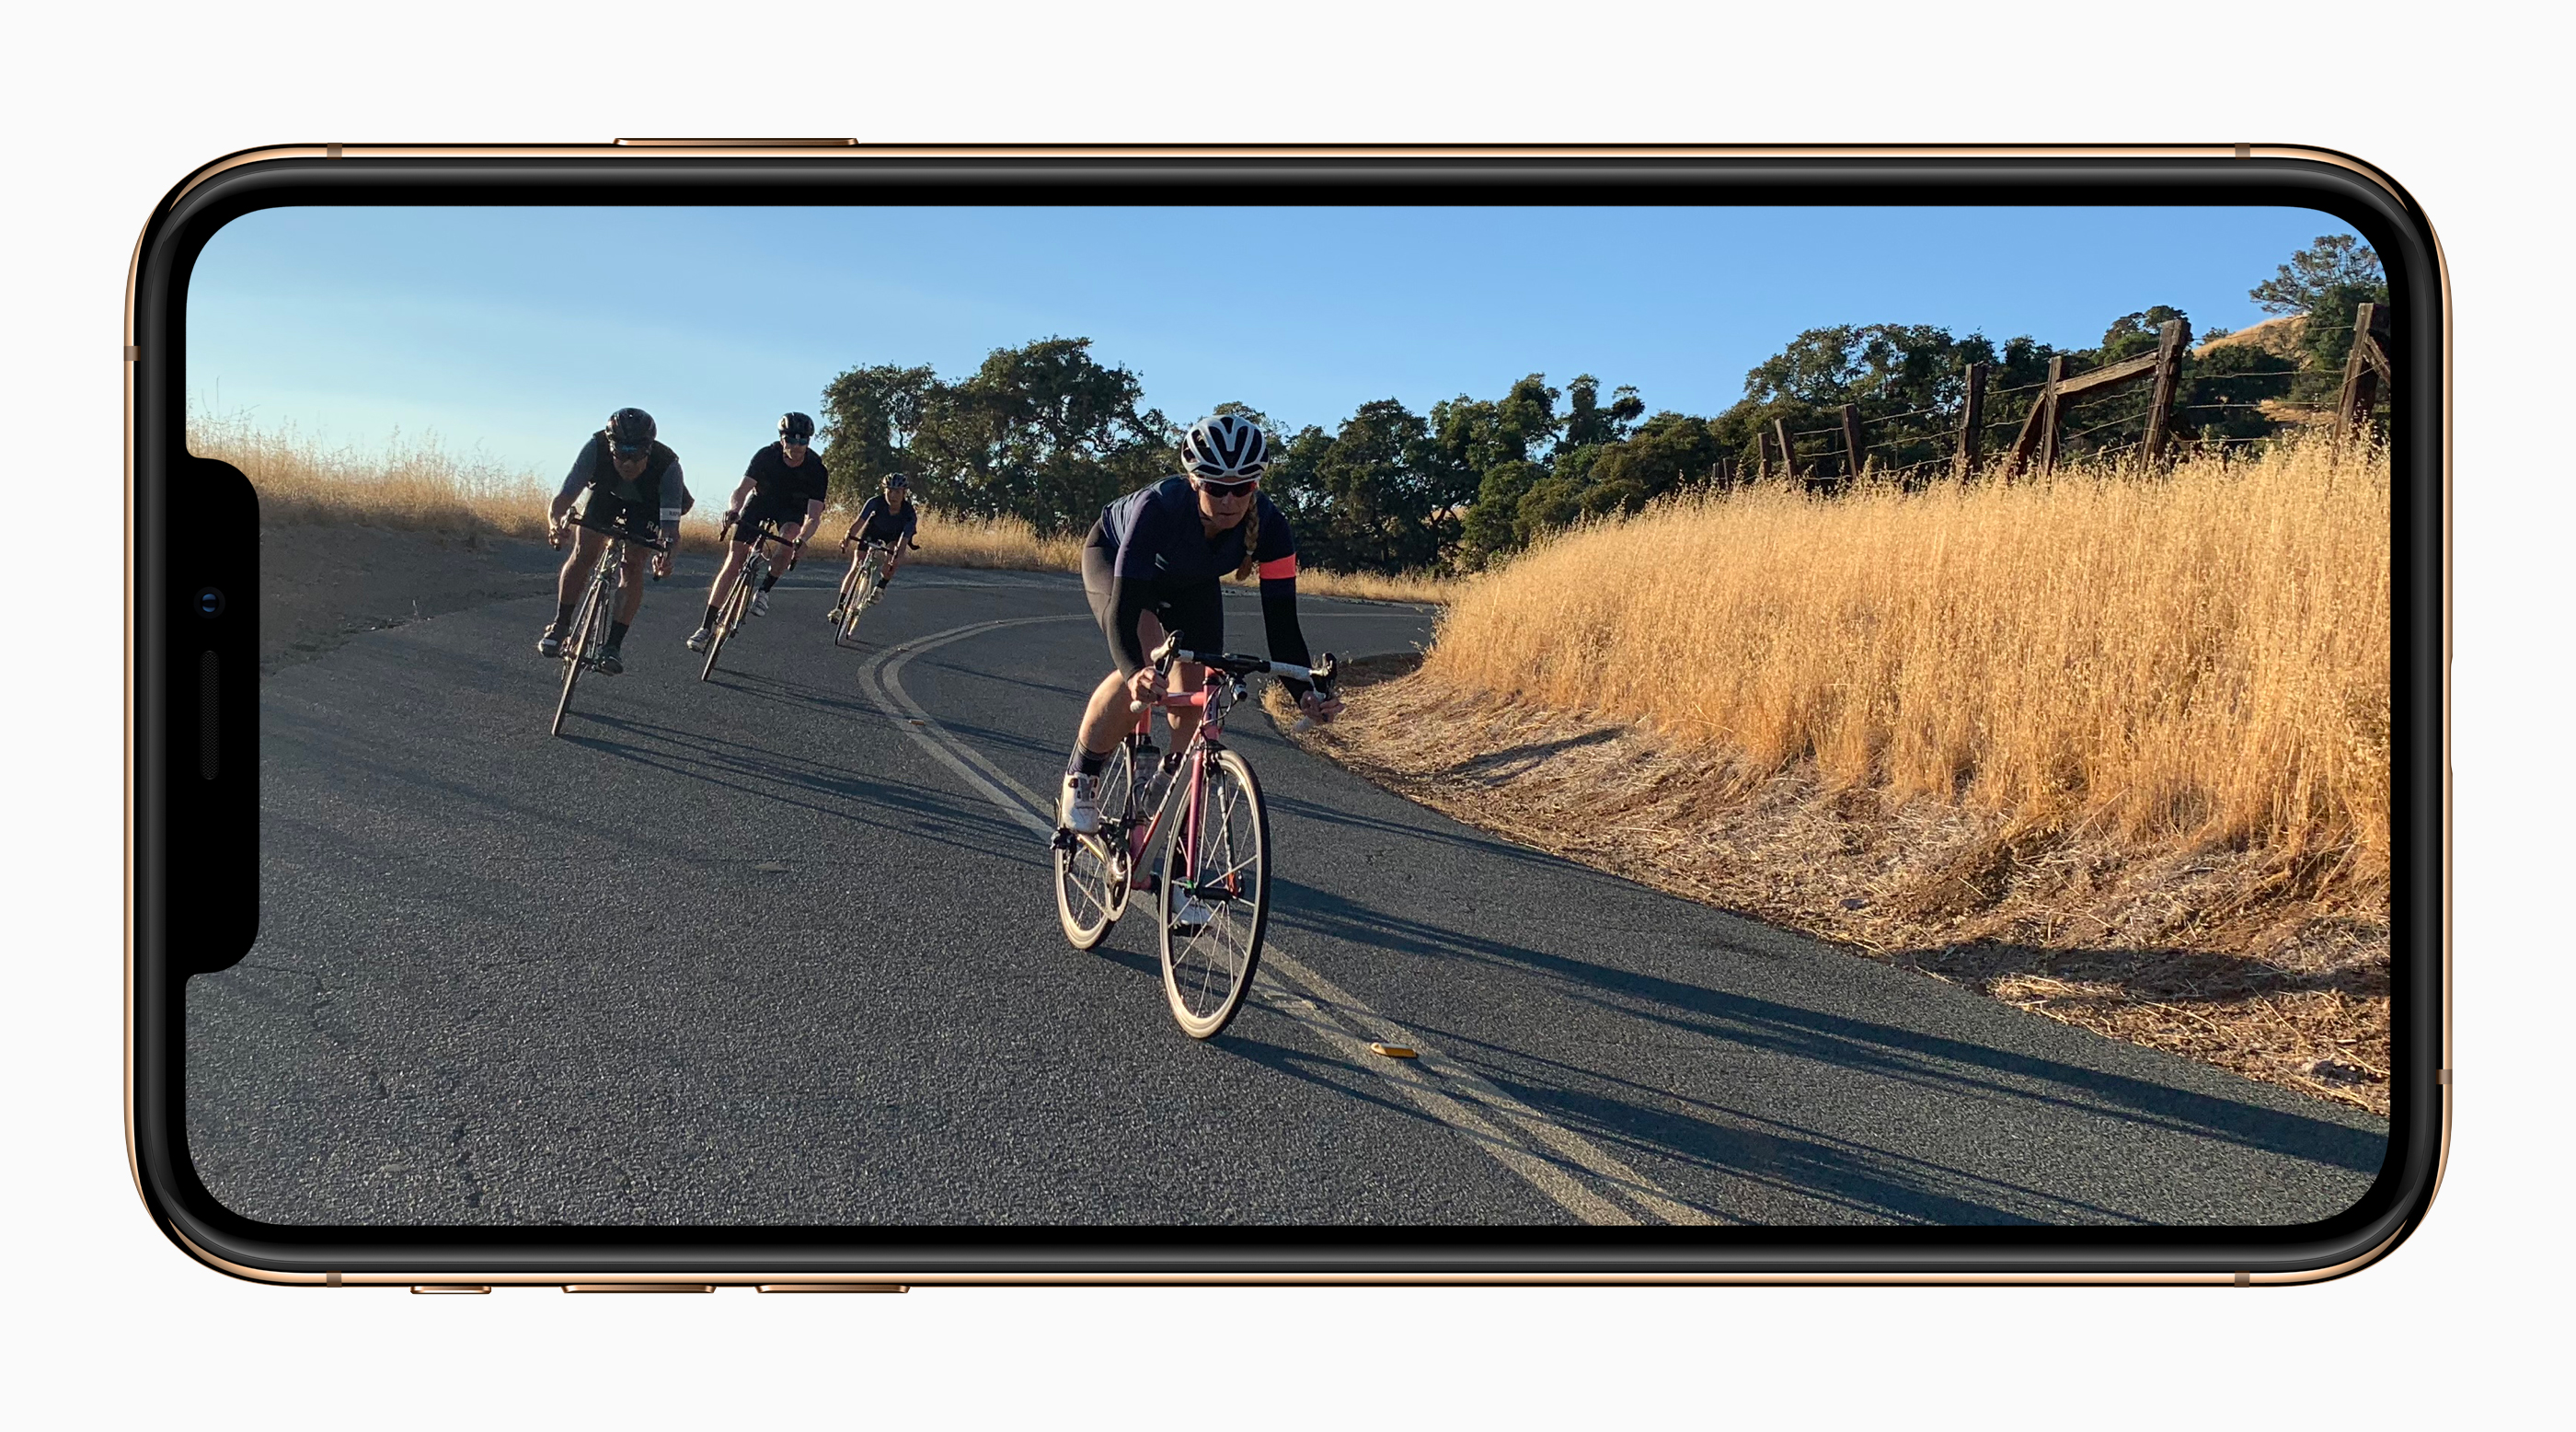 Apple-iPhone-Xs-gold-video-screen-09122018.jpg